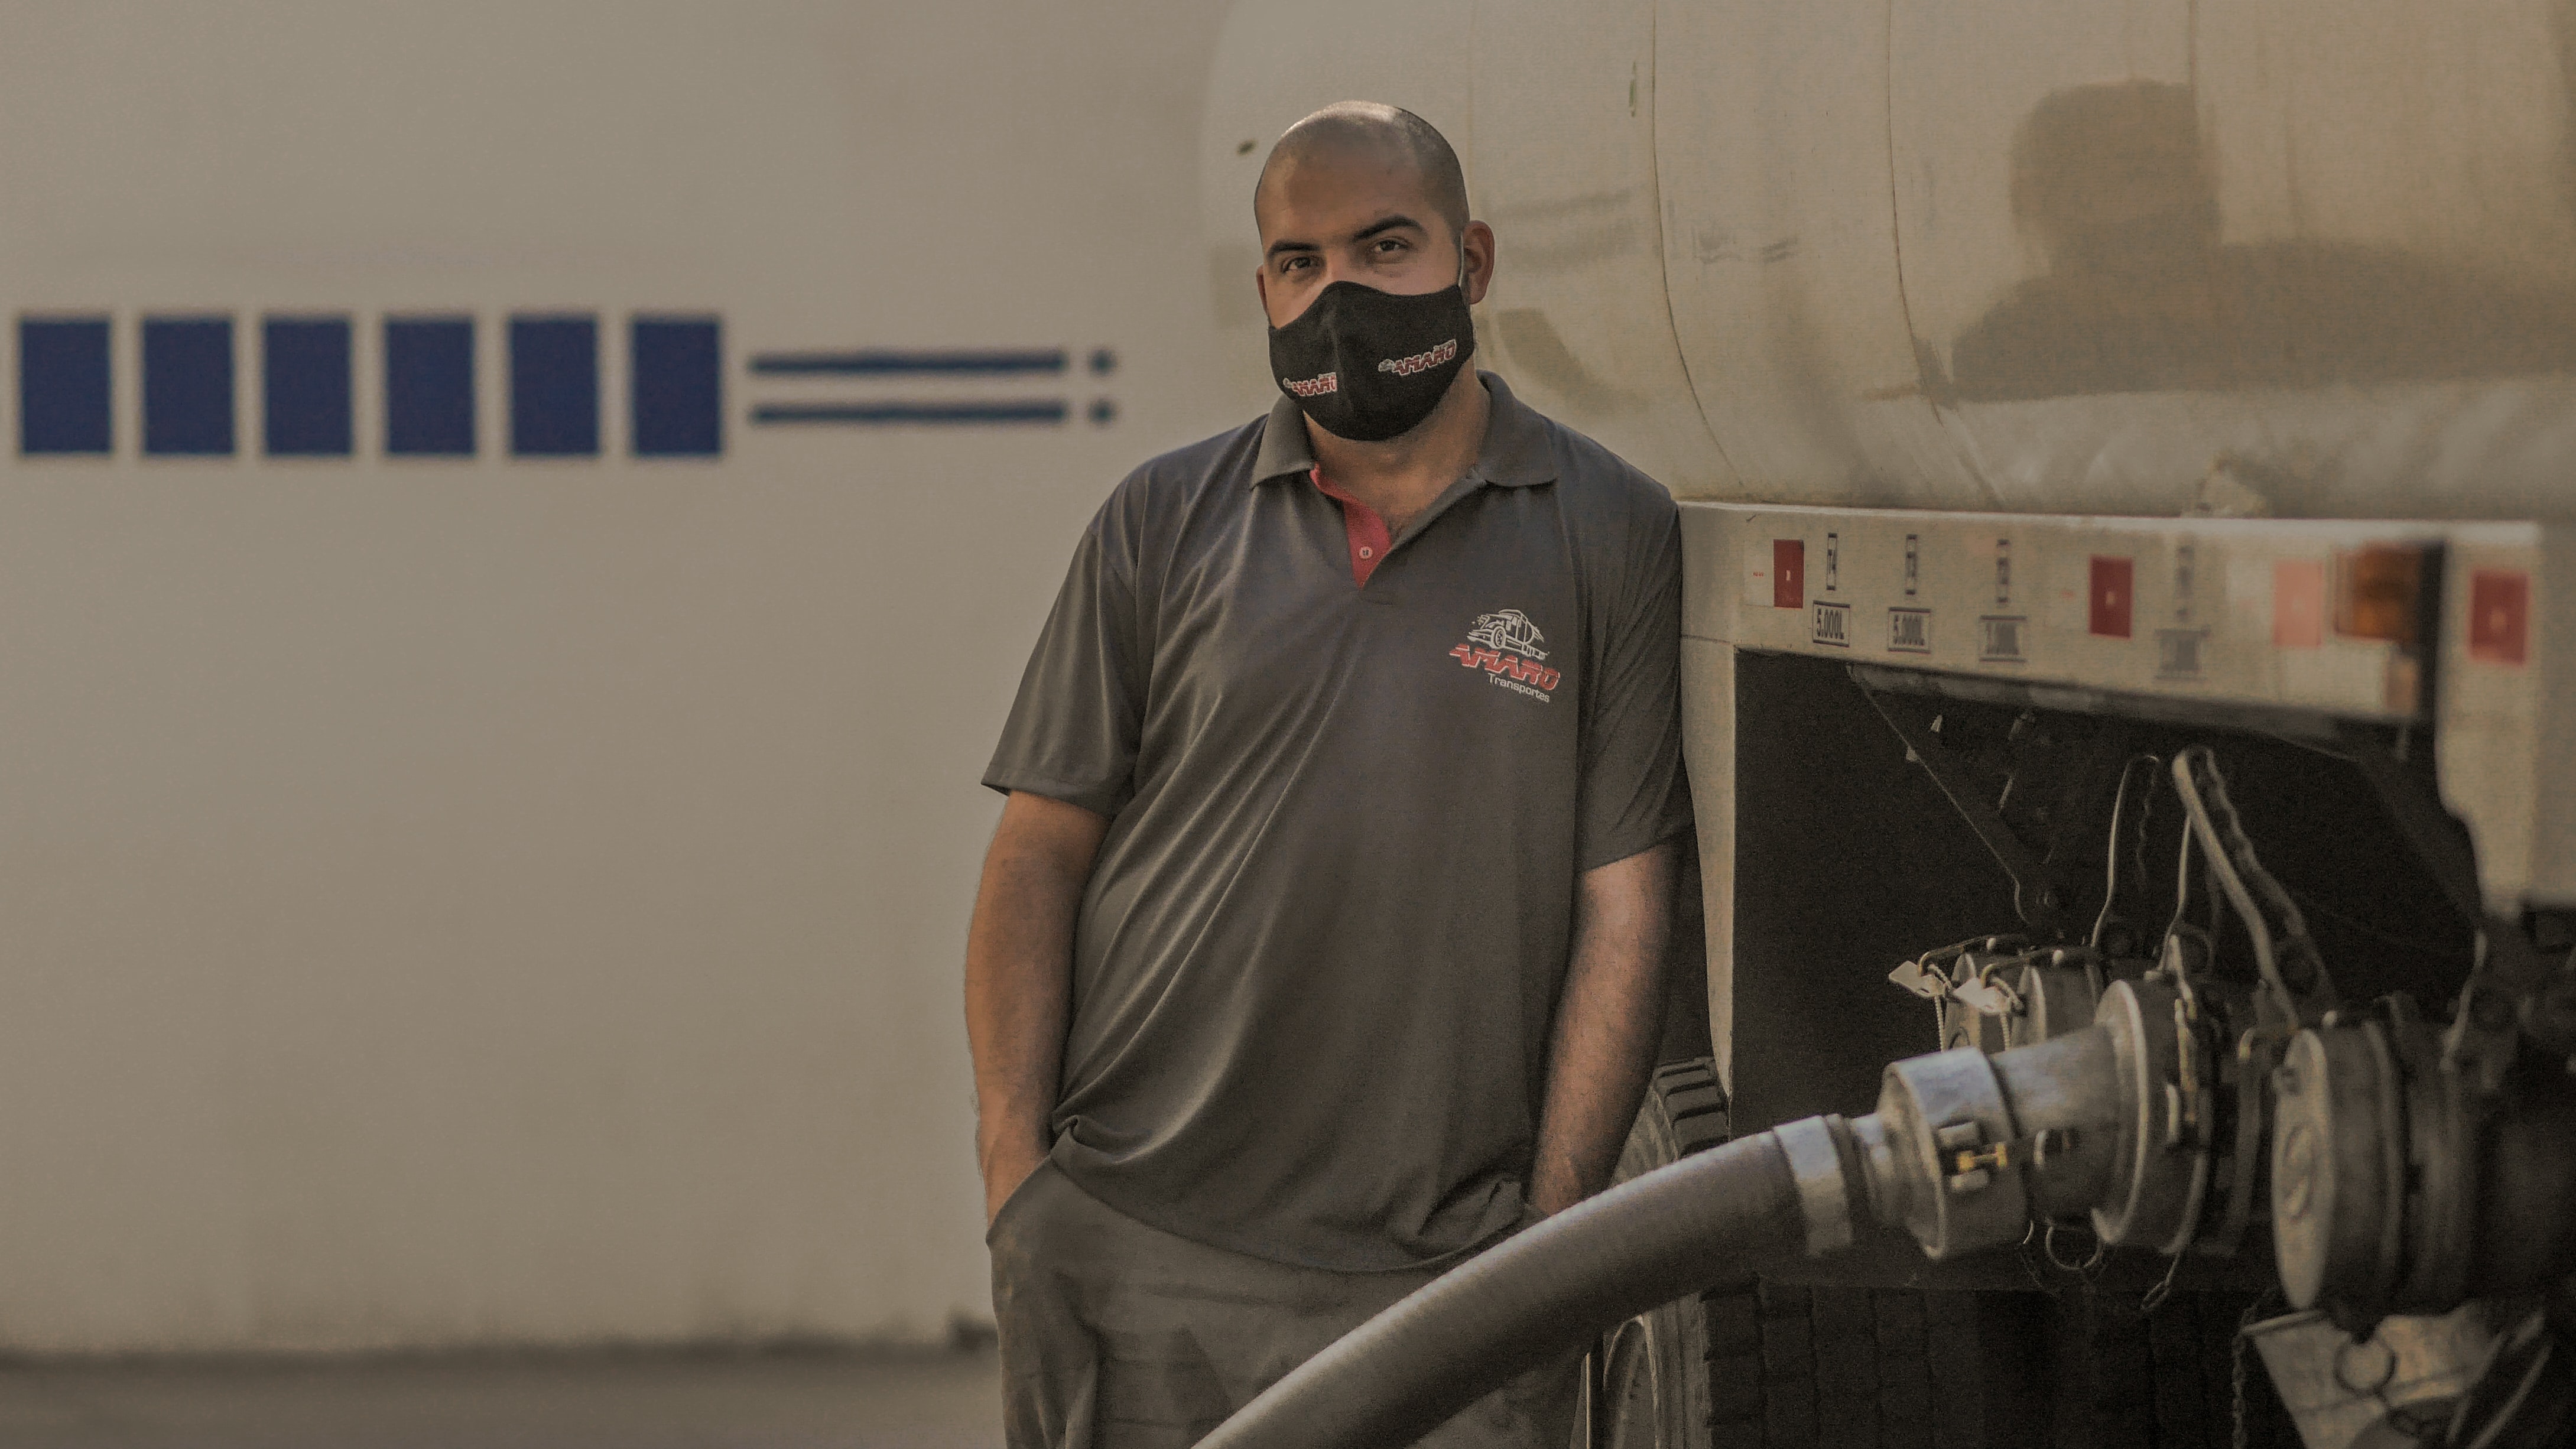 Man with tanker truck and hose; image by Pedro Ceu, via Unsplash.com.